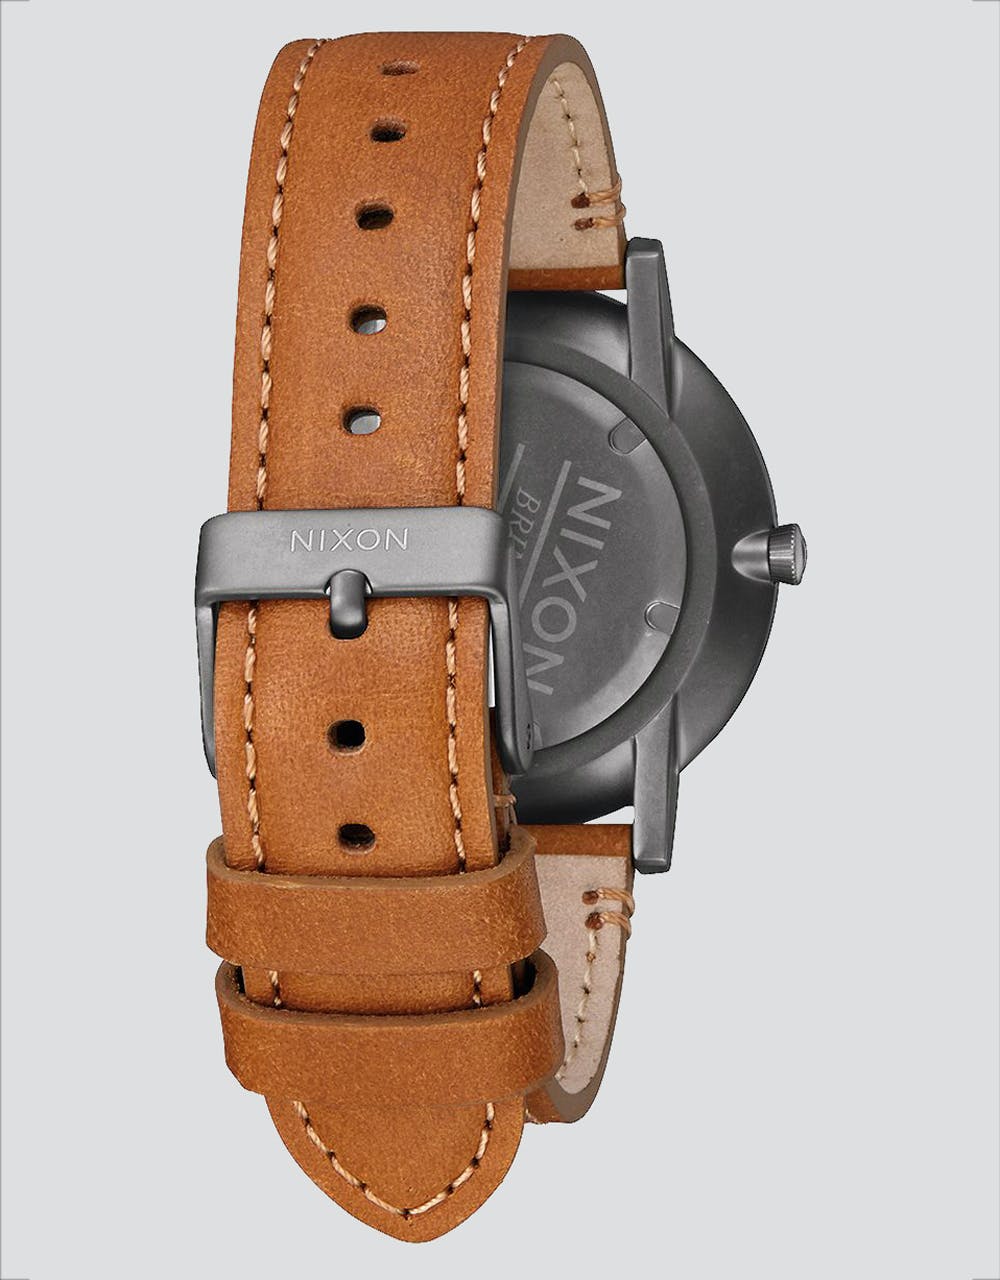 Nixon Porter Leather Watch - Gunmetal/Charcoal/Taupe